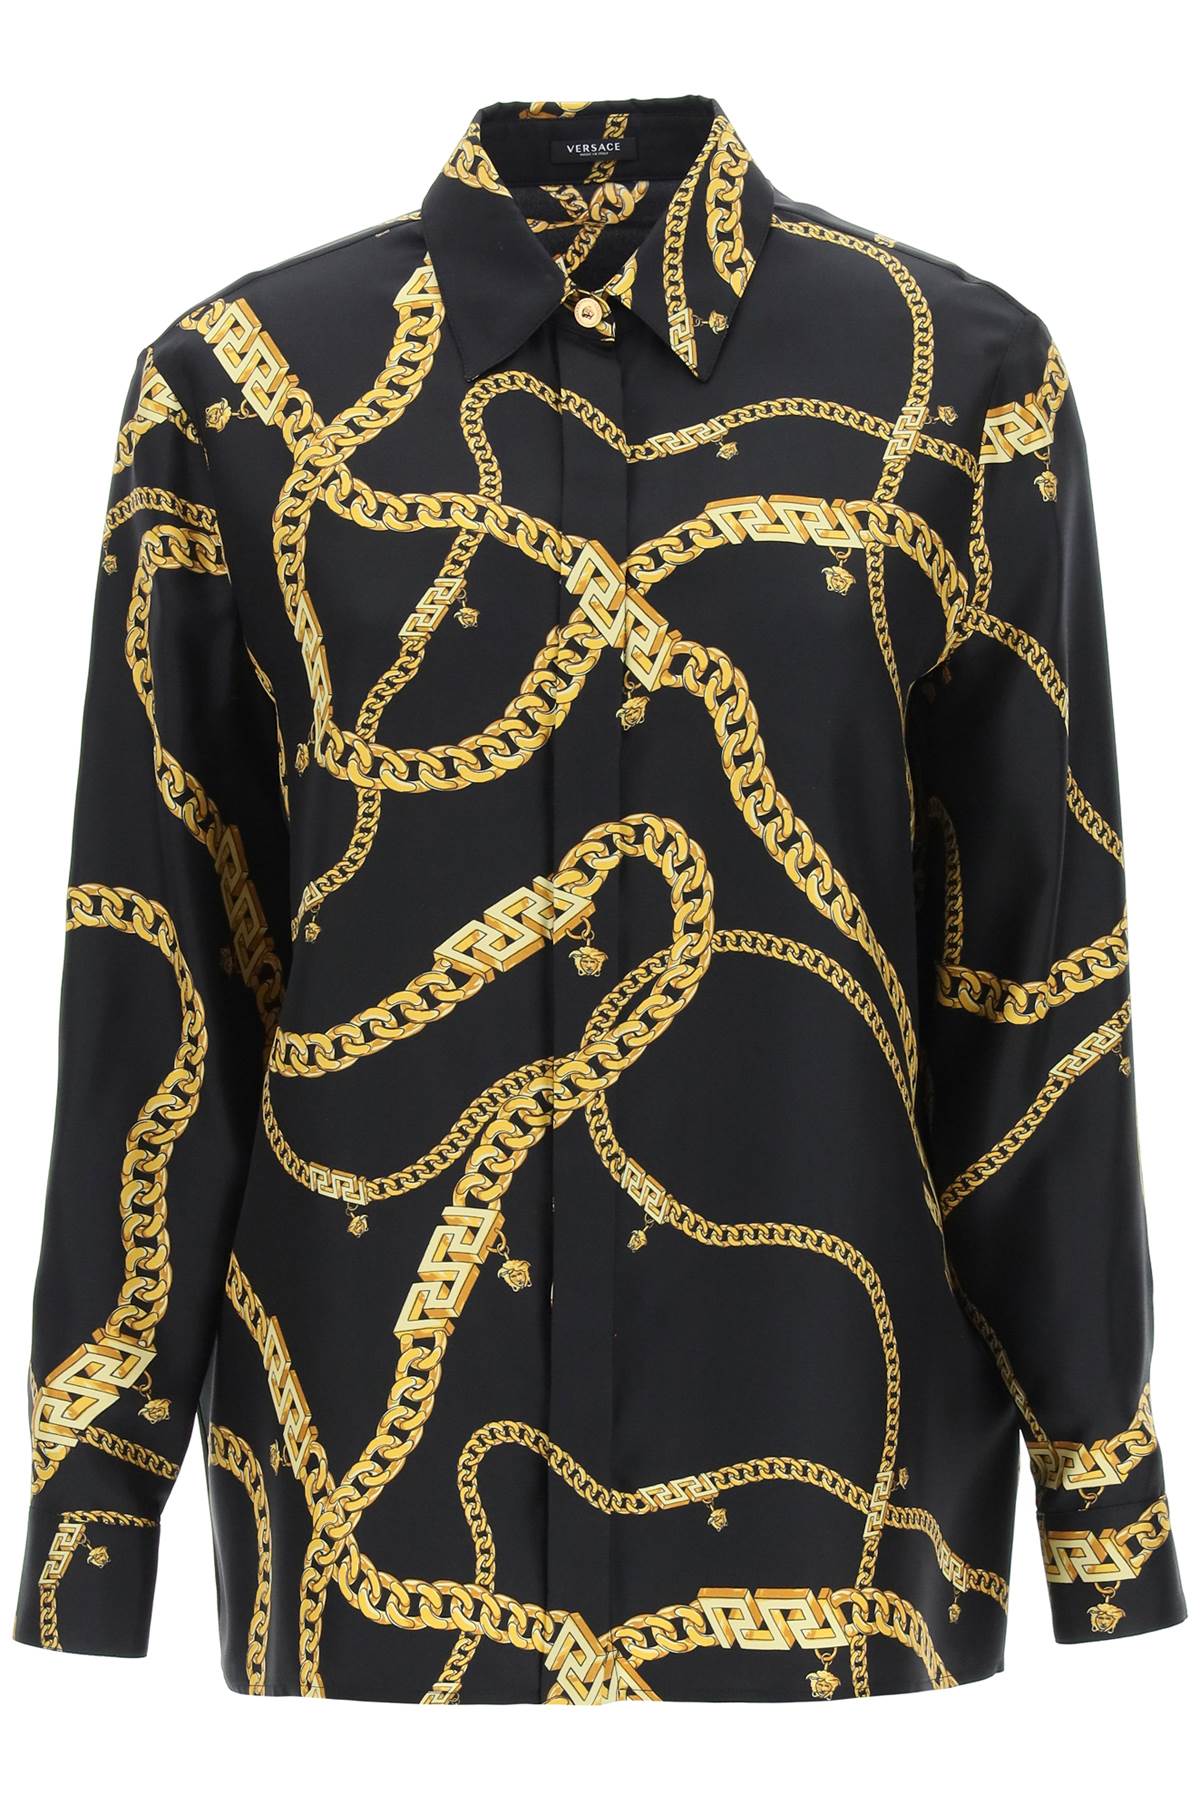 Versace Chain Print Silk Shirt